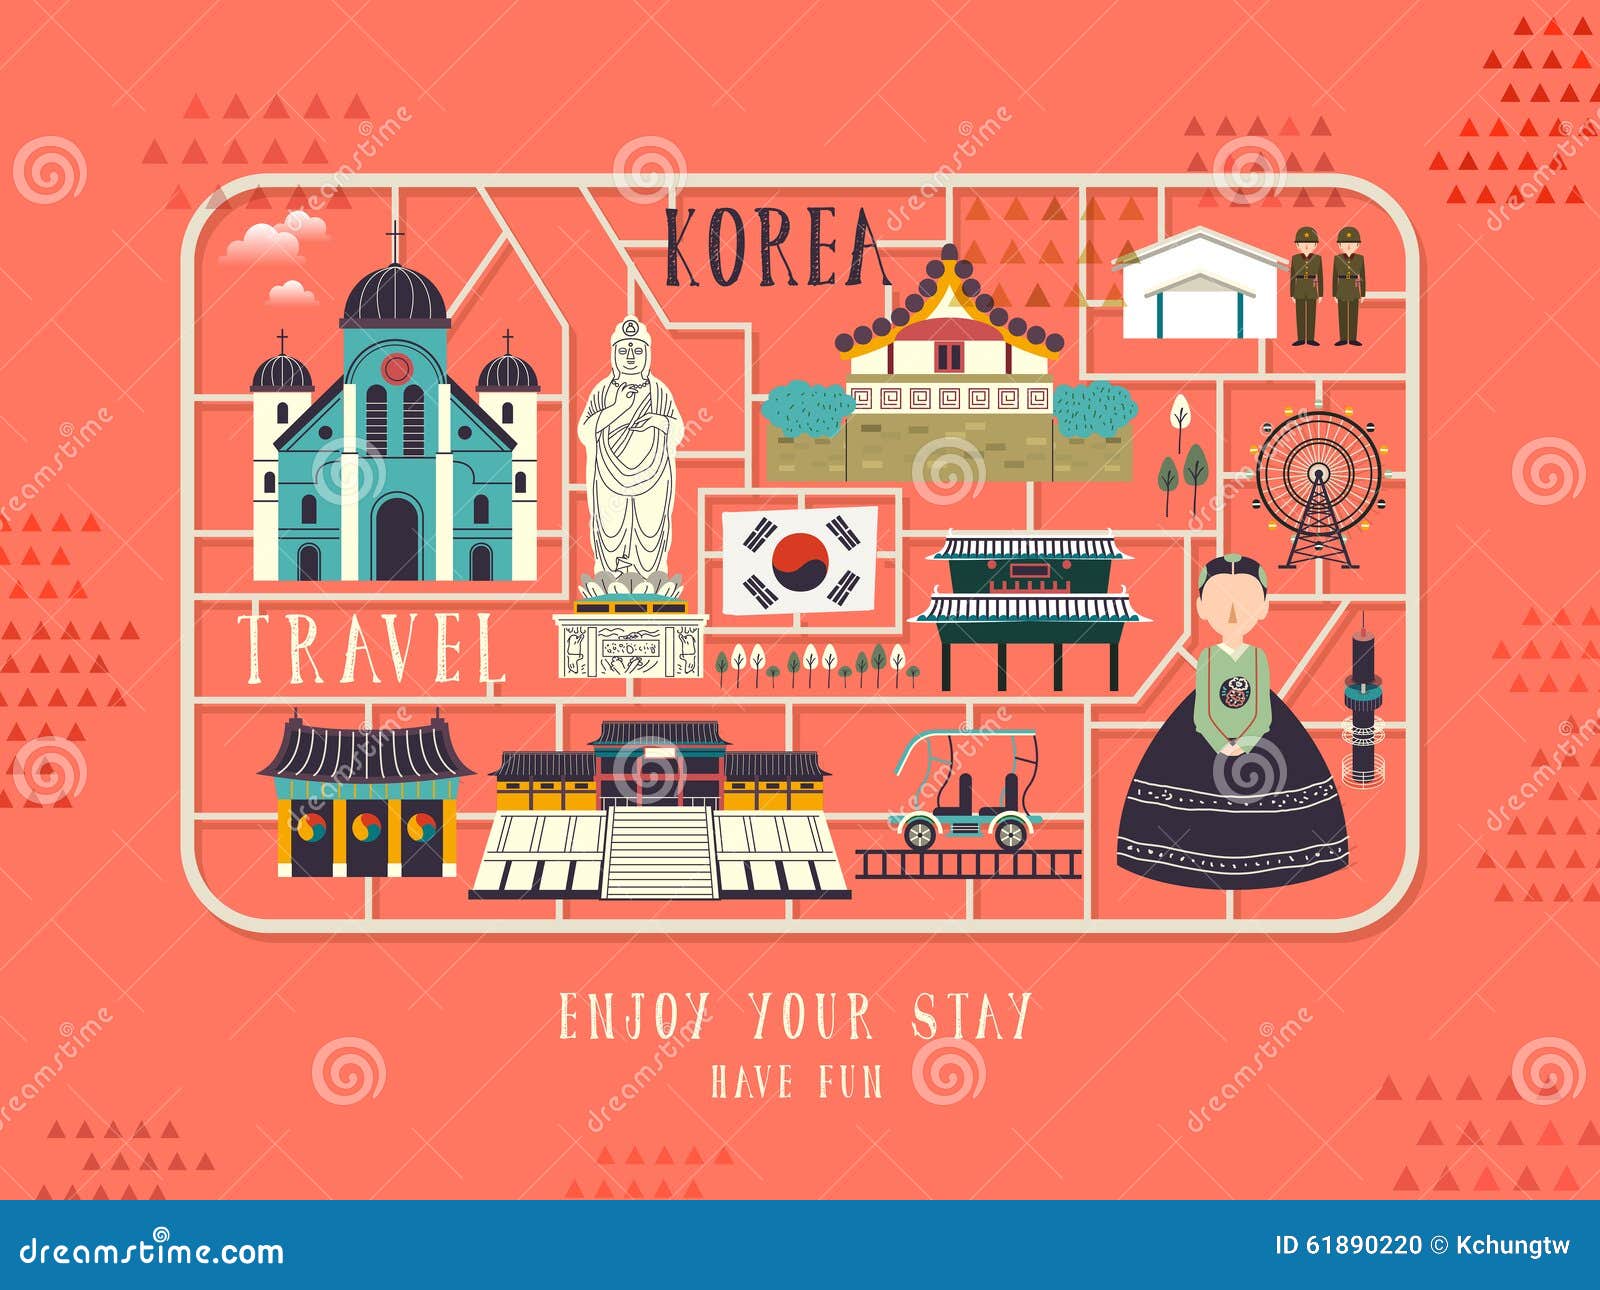 South Korea Travel Poster